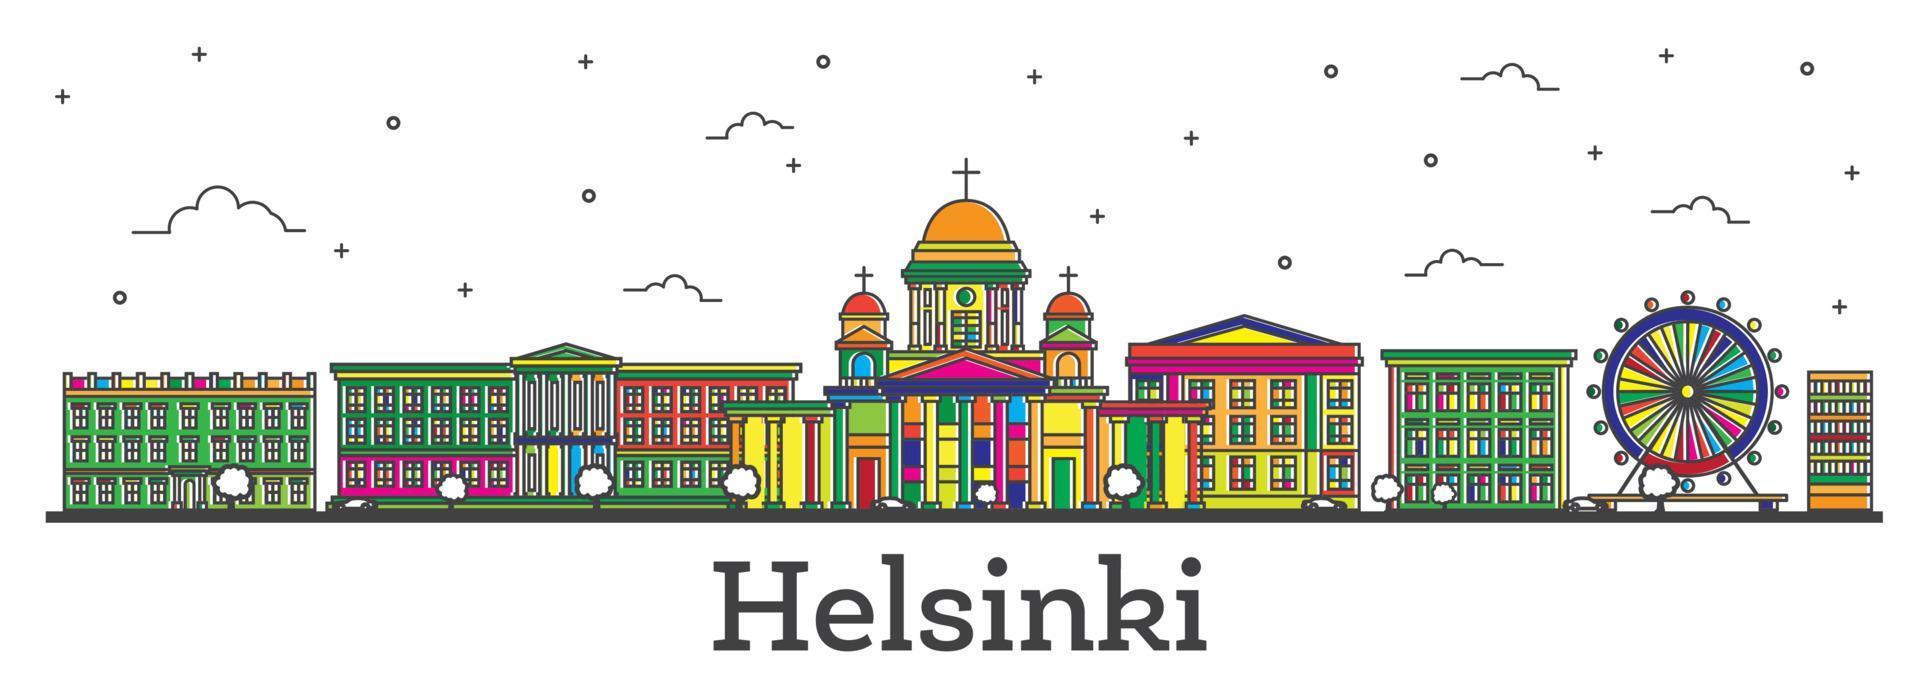 Helsinki Finland stad horizon. vector